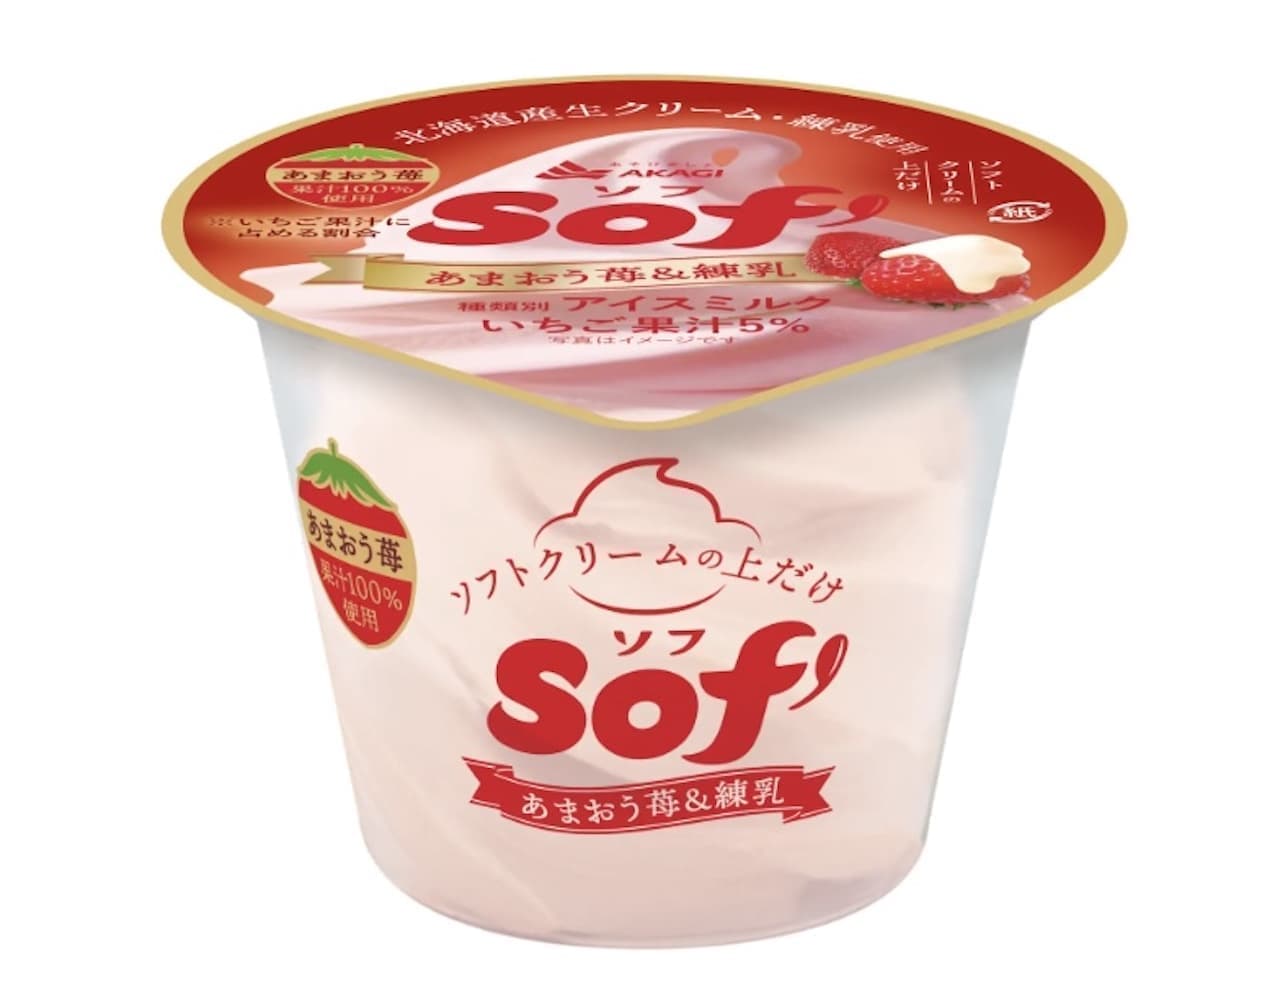 Akagi Nyugyo "Sof' Amao Strawberry & Condensed Milk